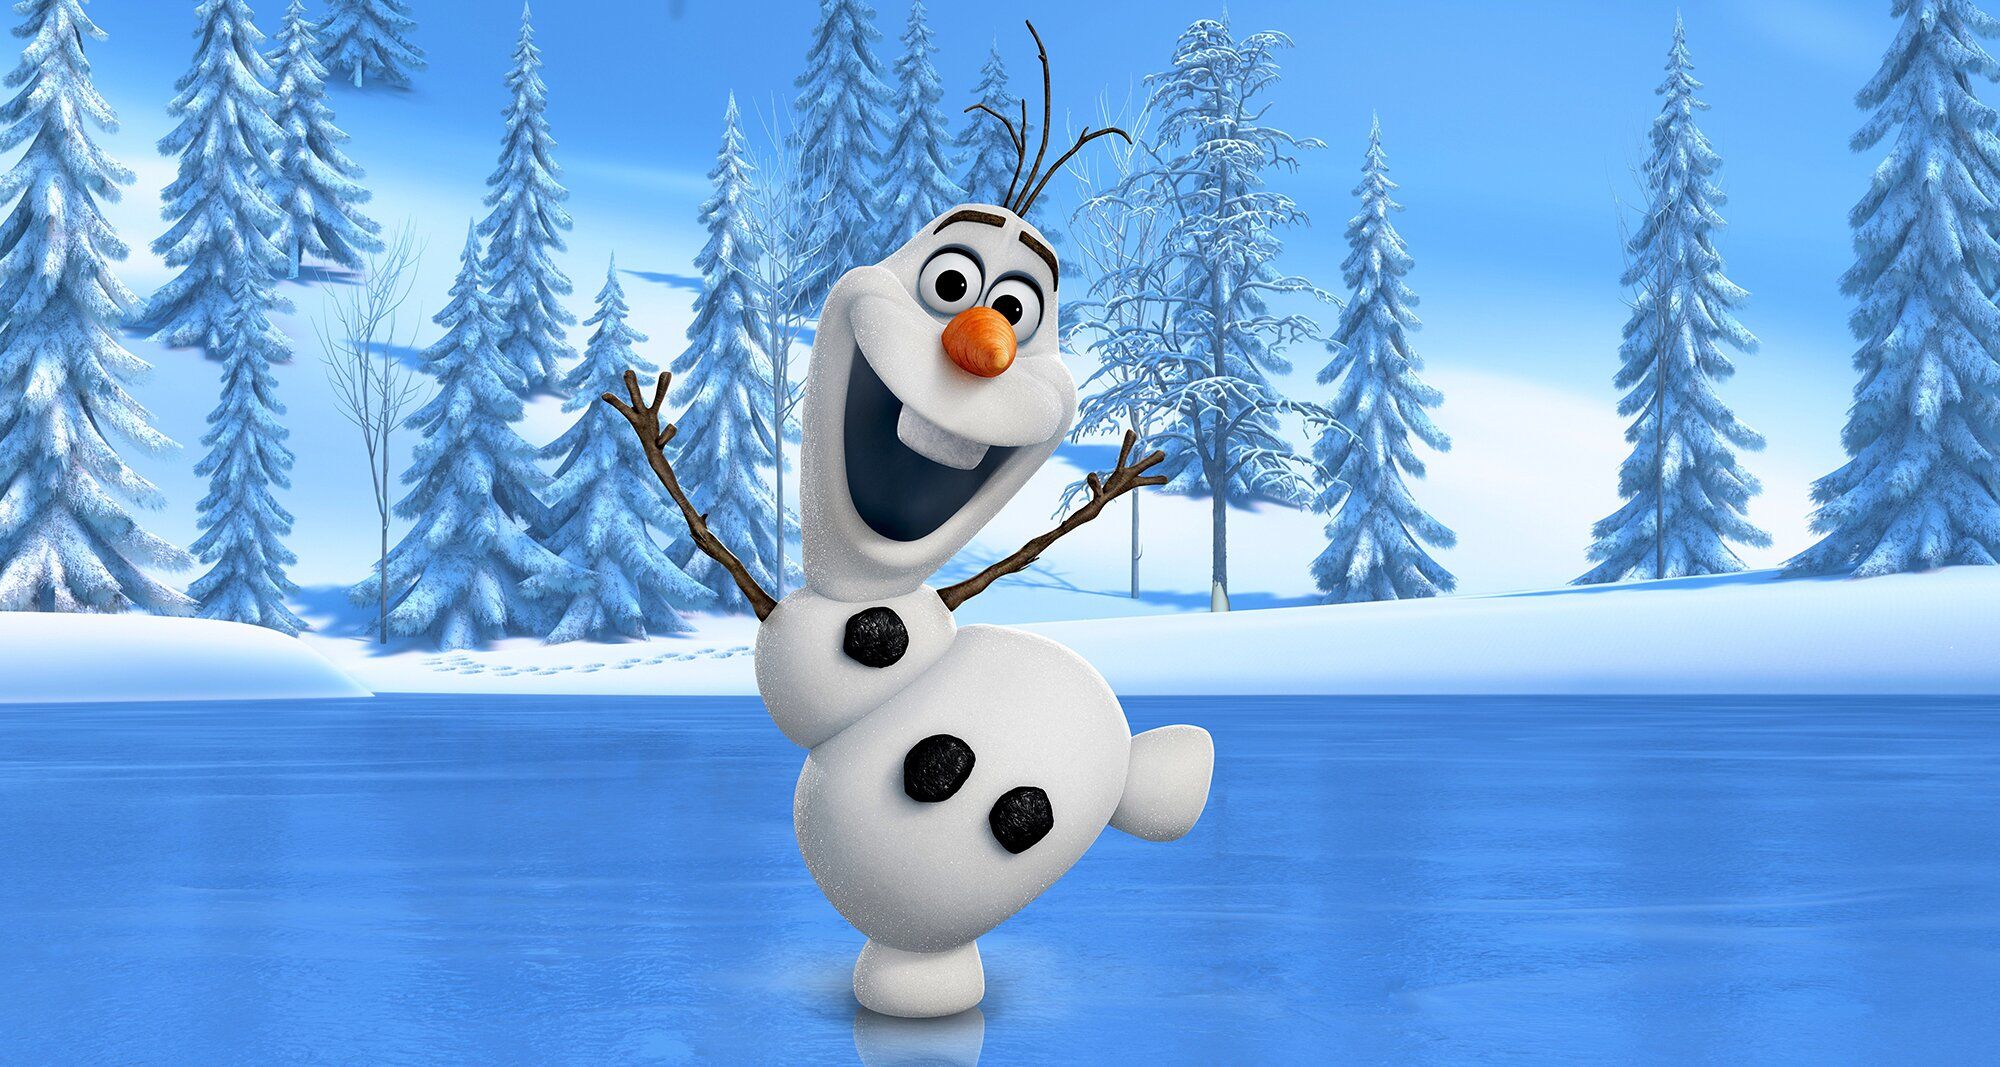 Frozen, la regista ammette: “Olaf? Vorrei ucciderlo”